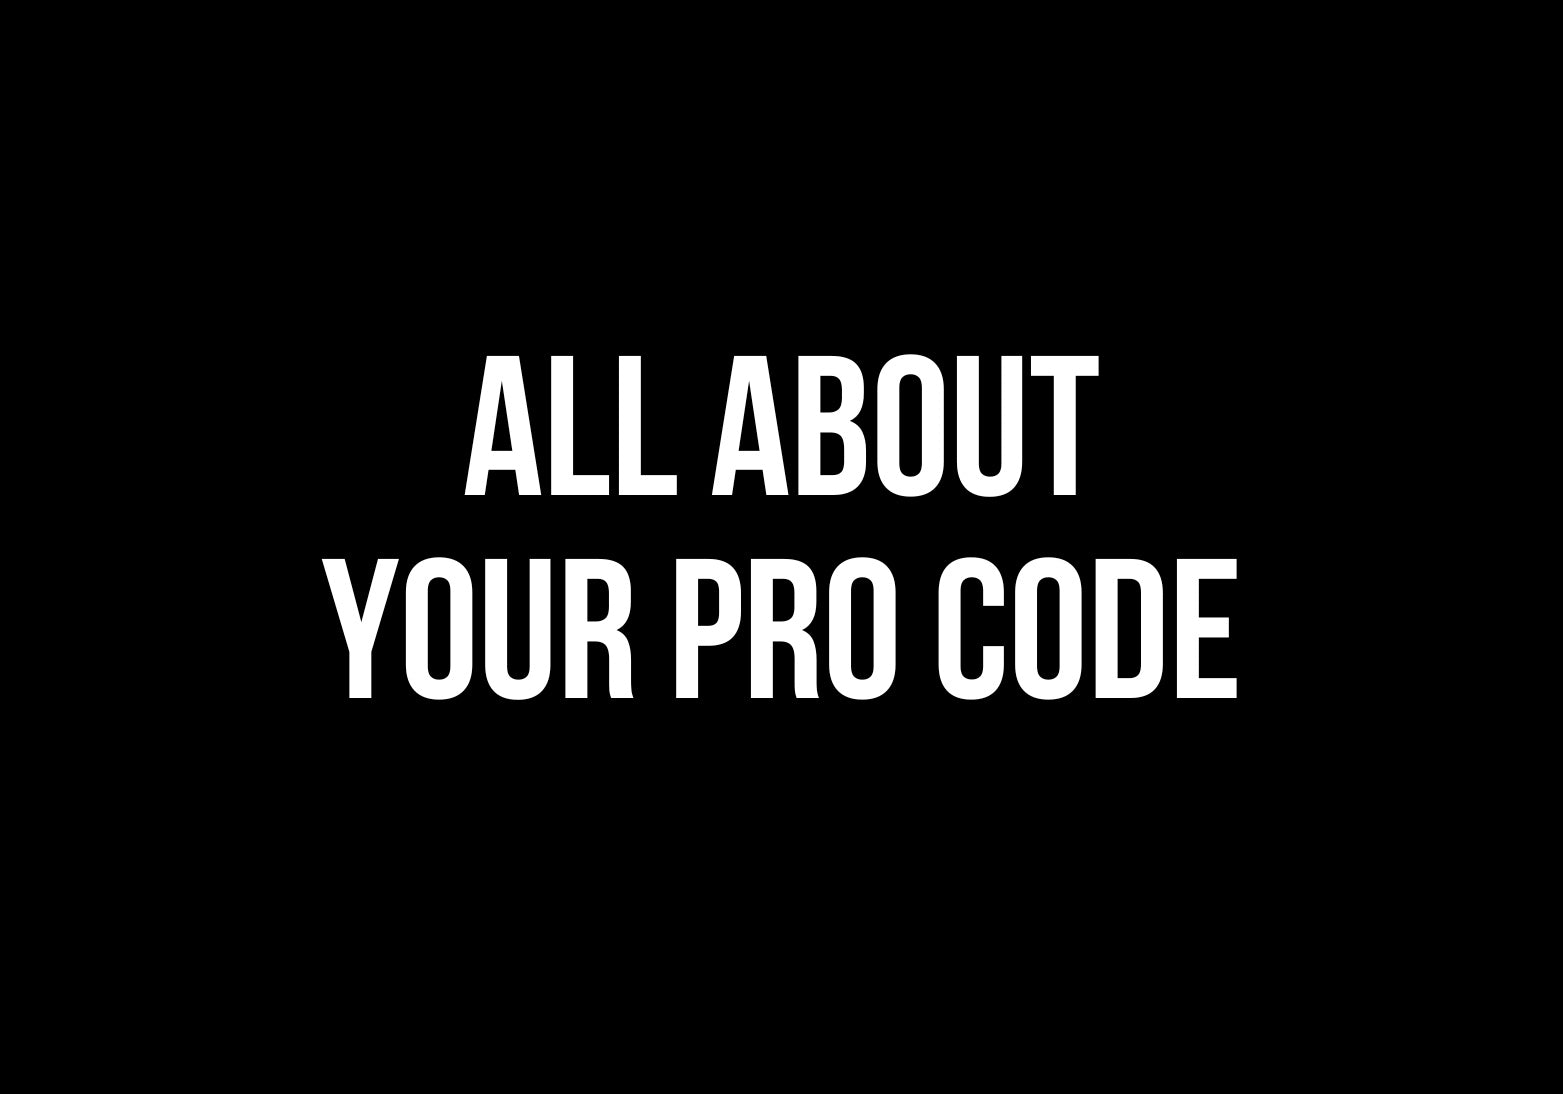 Pro Code